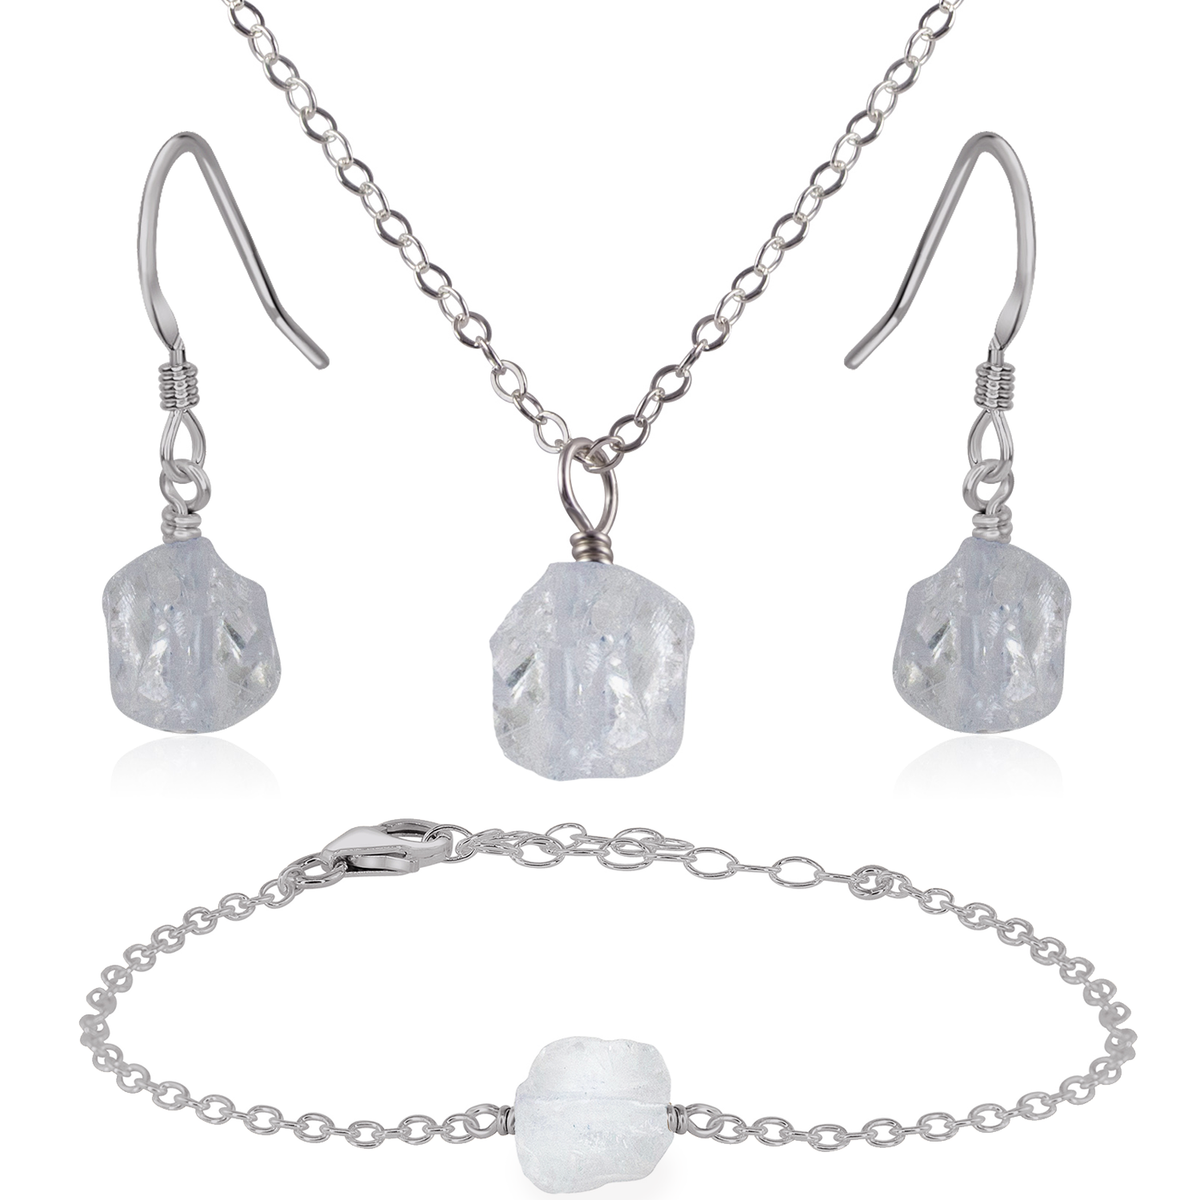 Raw Crystal Quartz Jewellery Set - Raw Crystal Quartz Jewellery Set - Stainless Steel / Cable / Necklace & Earrings & Bracelet - Luna Tide Handmade Crystal Jewellery